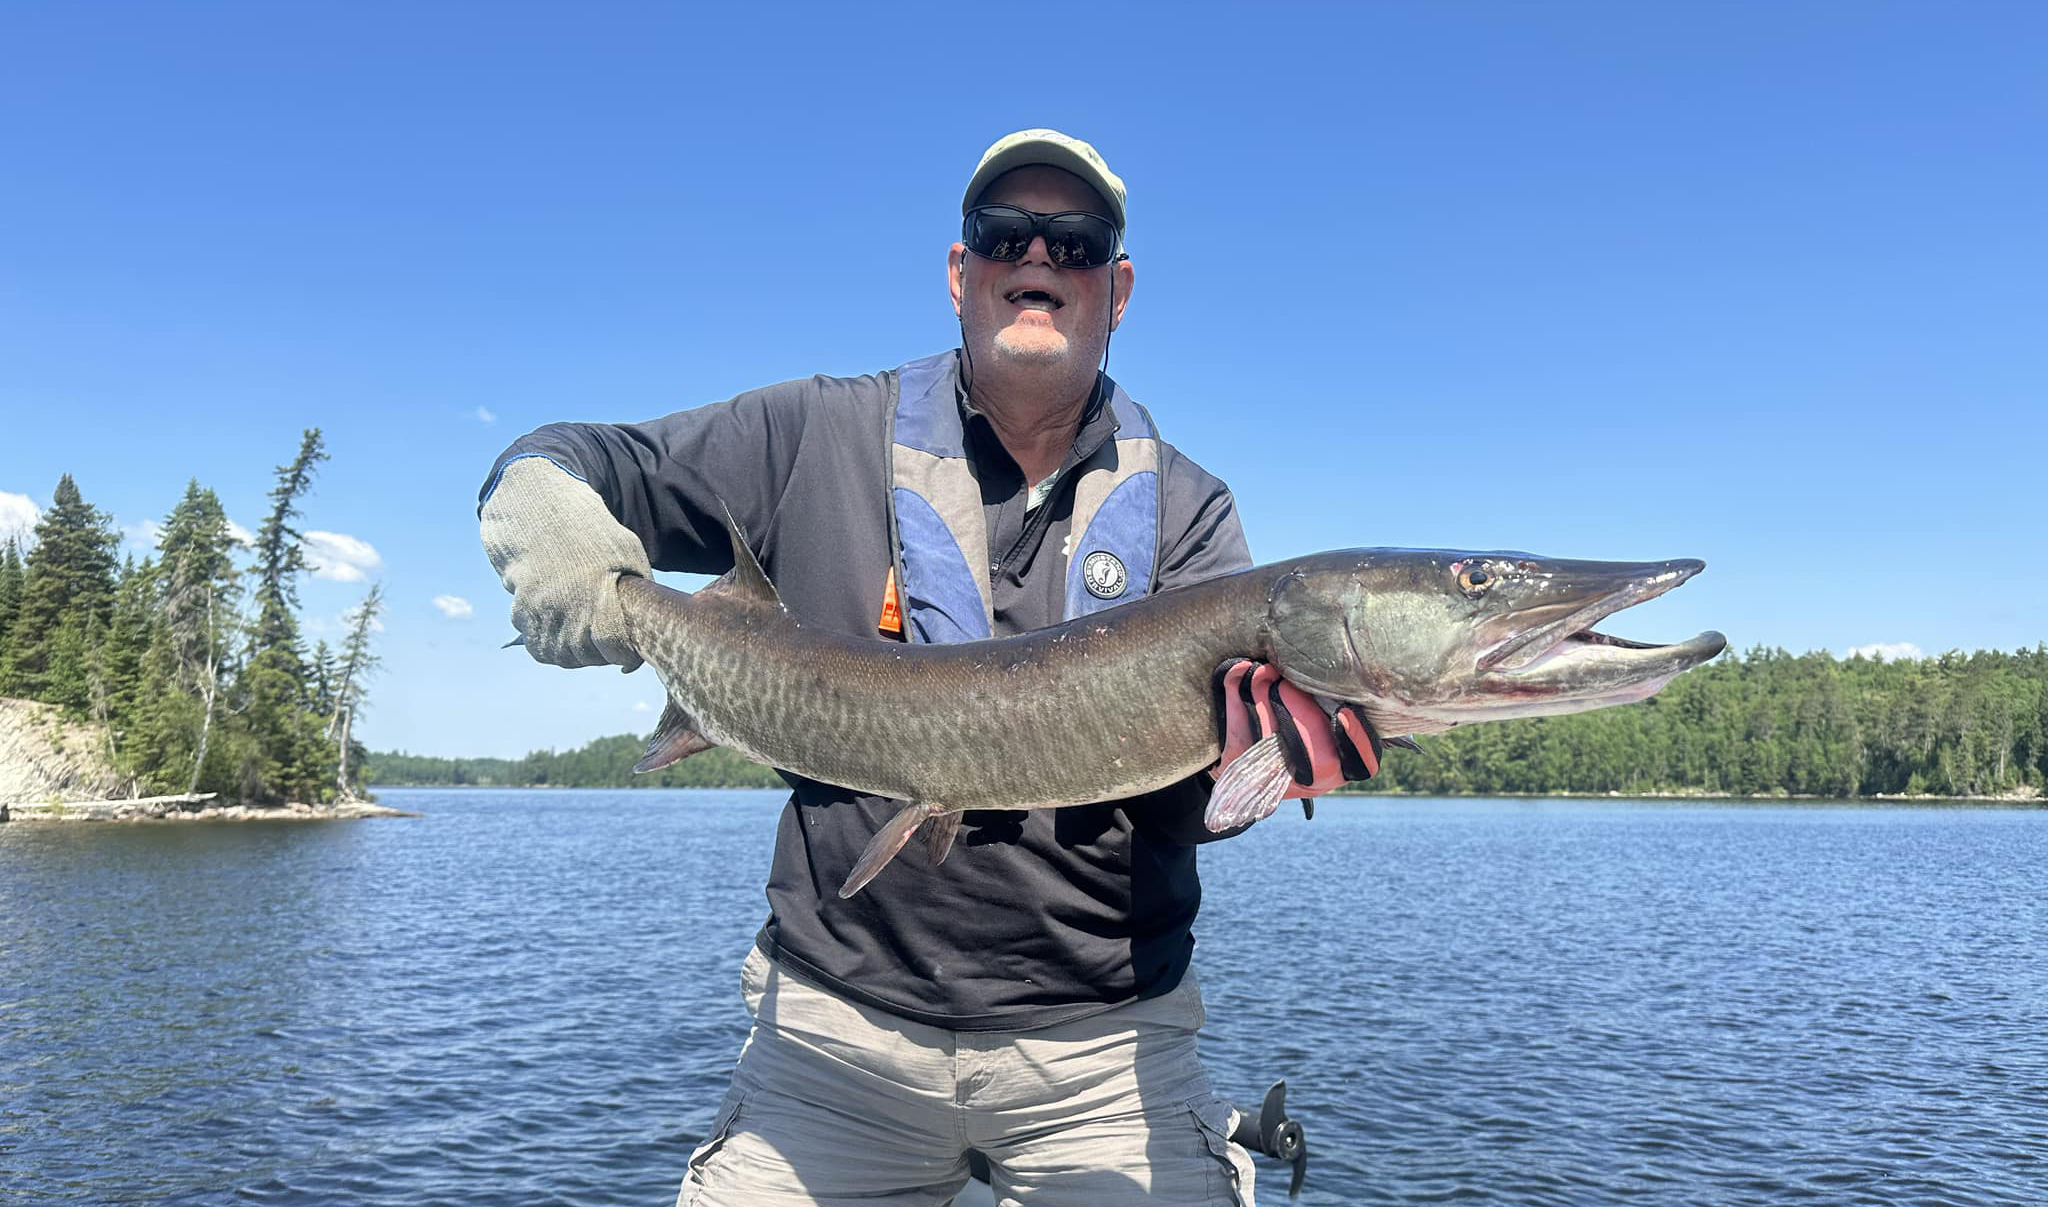 44 inch muskie caught on cedar lake